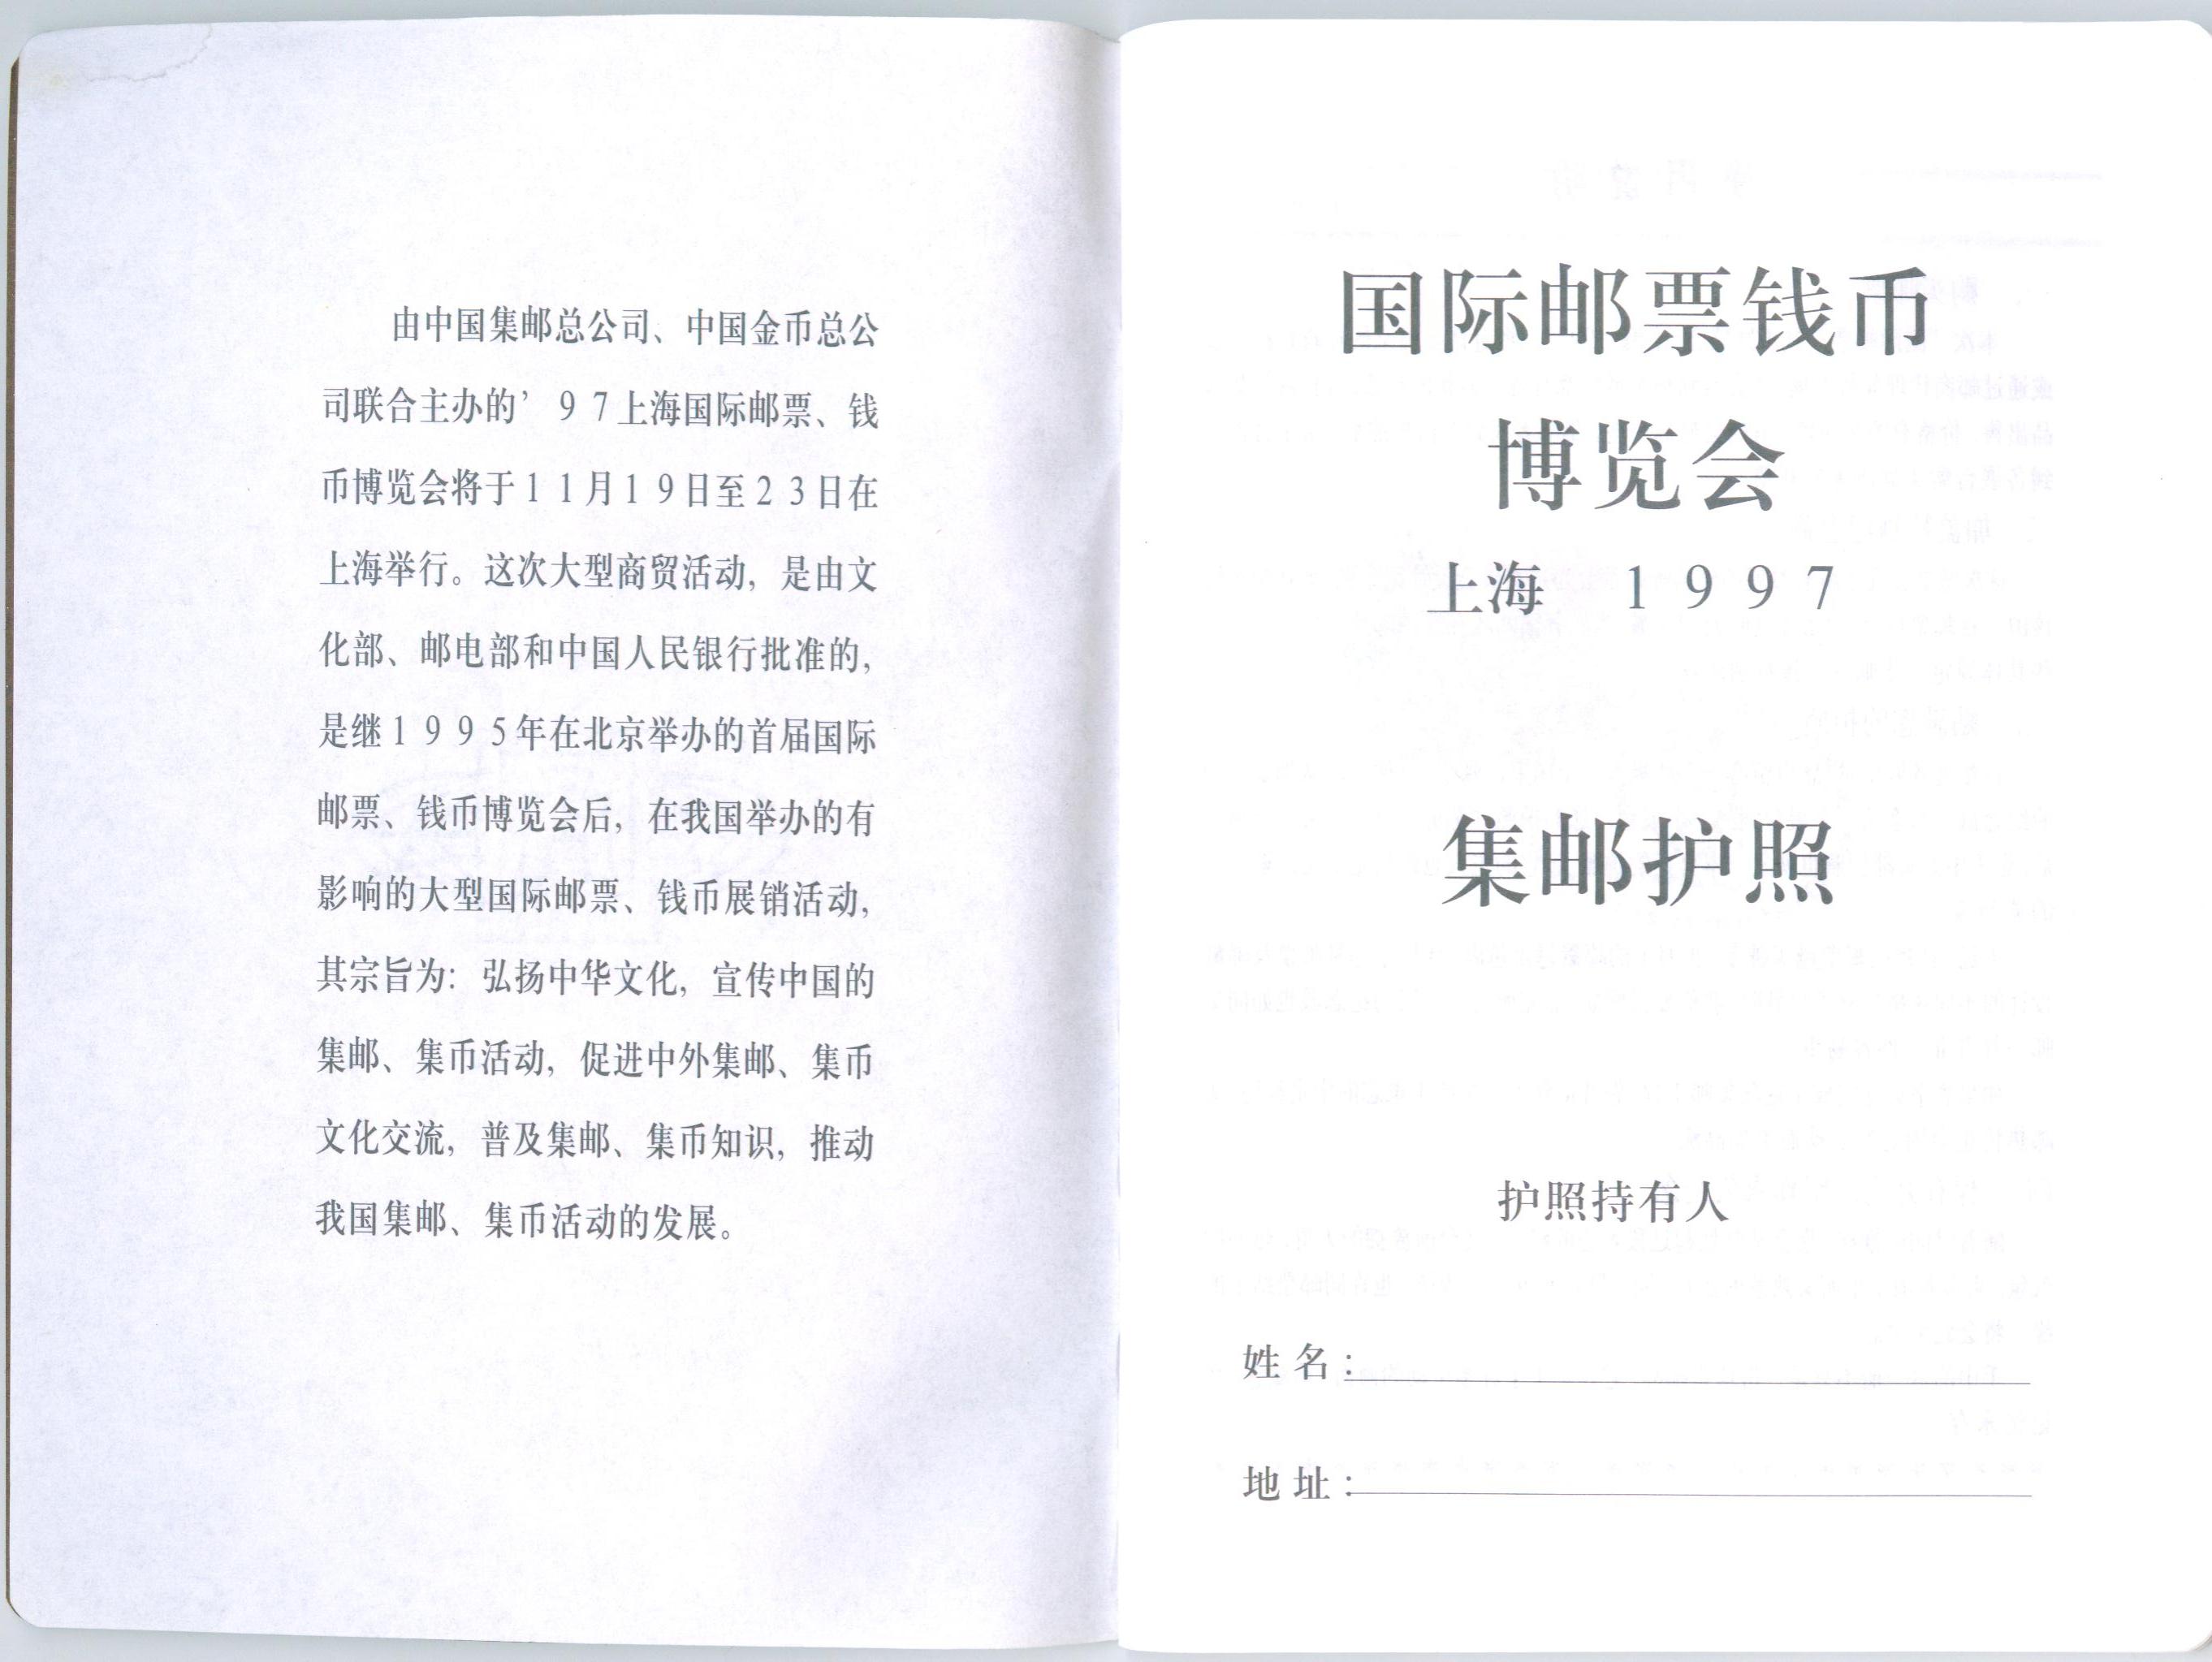 M9016, Shanghai 1997 -- International Philatelic Passport - Click Image to Close